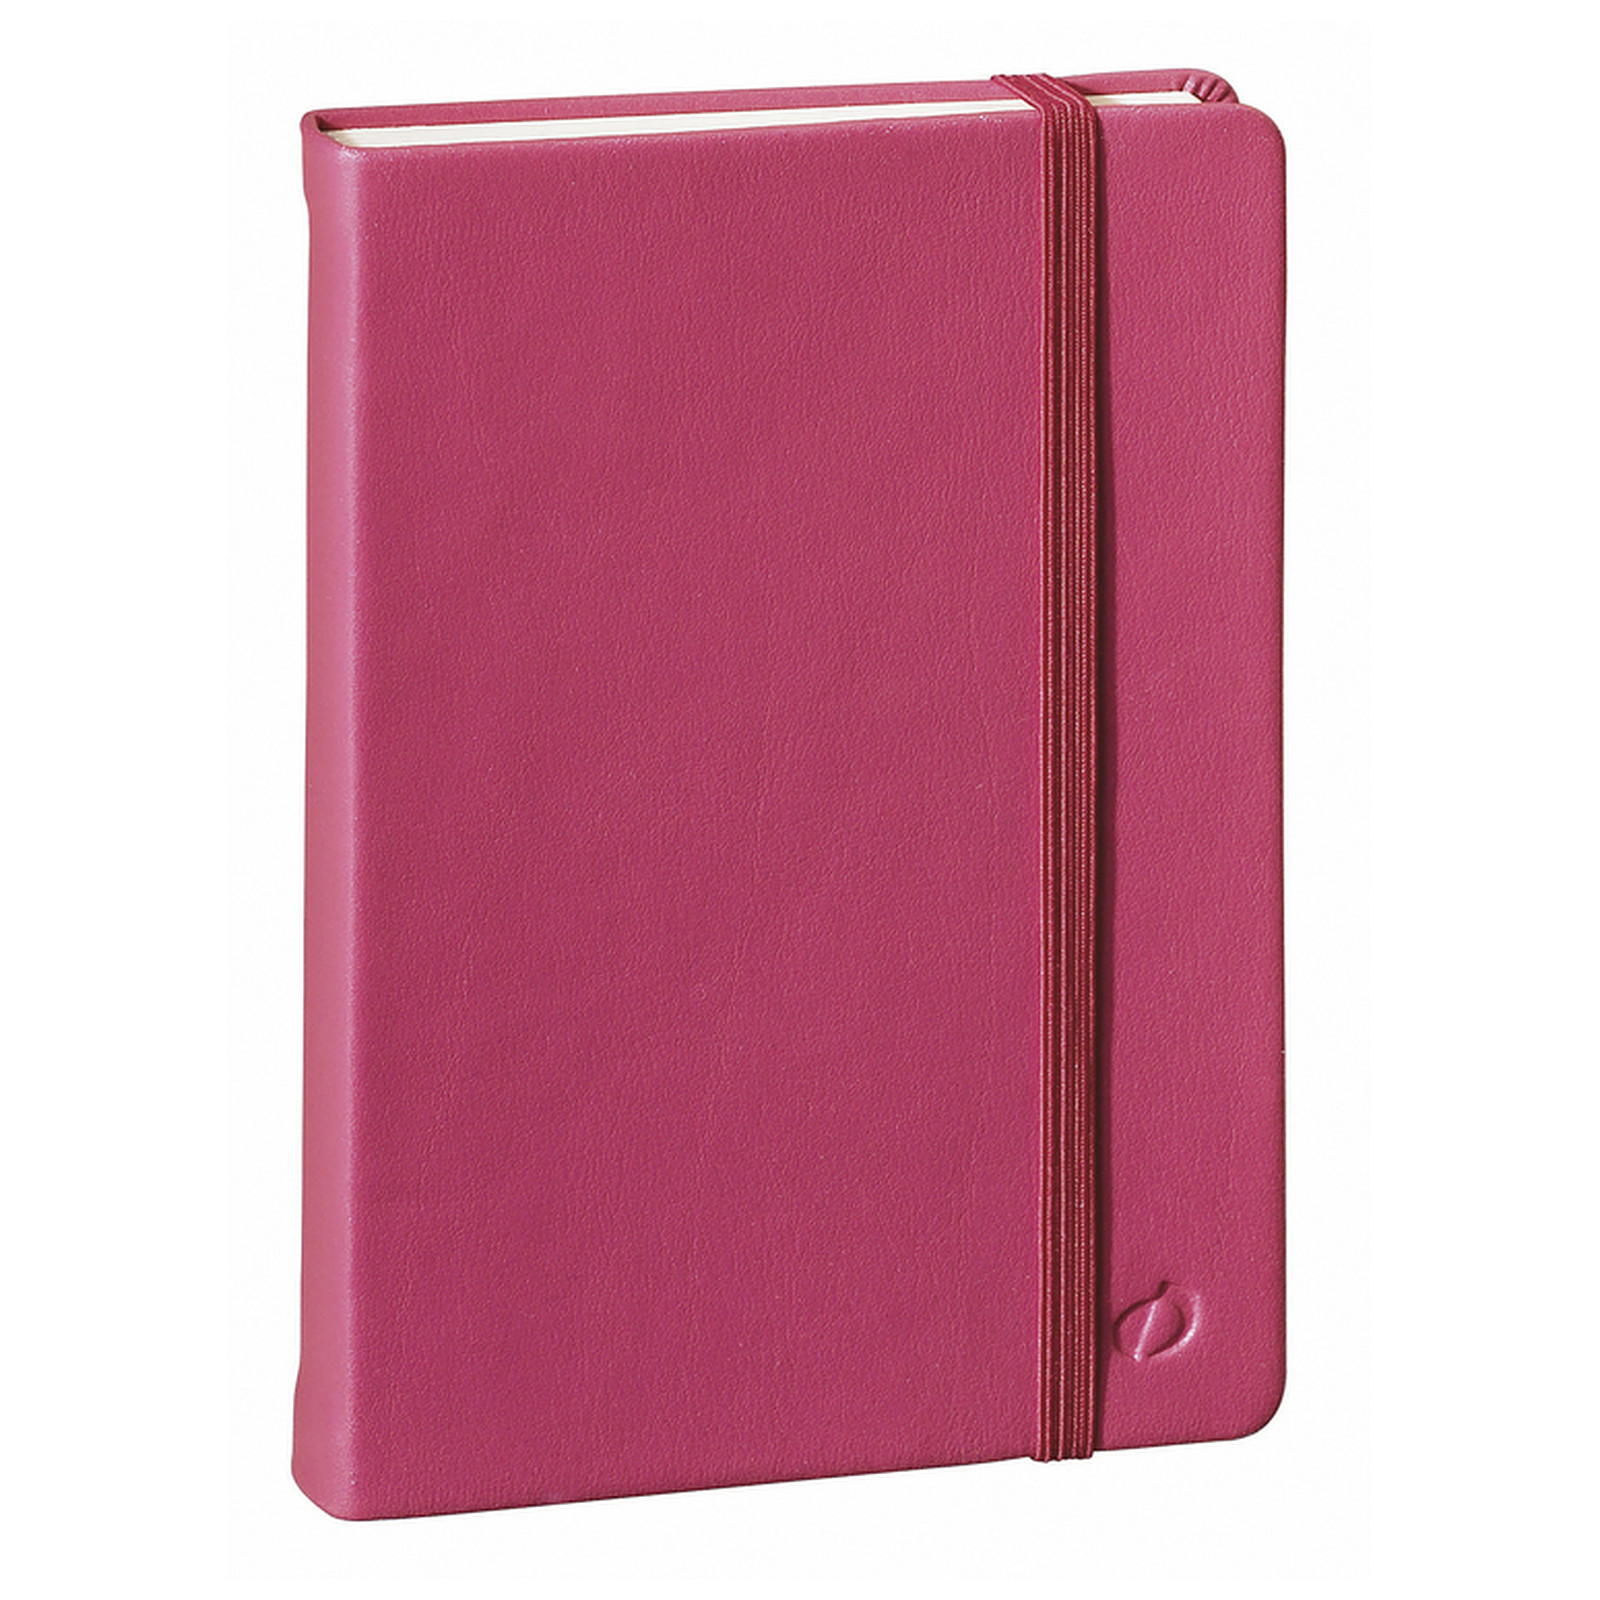 Quo Vadis Carnet de note emboite 10x15cm 192 pages lignee rose framboise - Carnet Quo Vadis